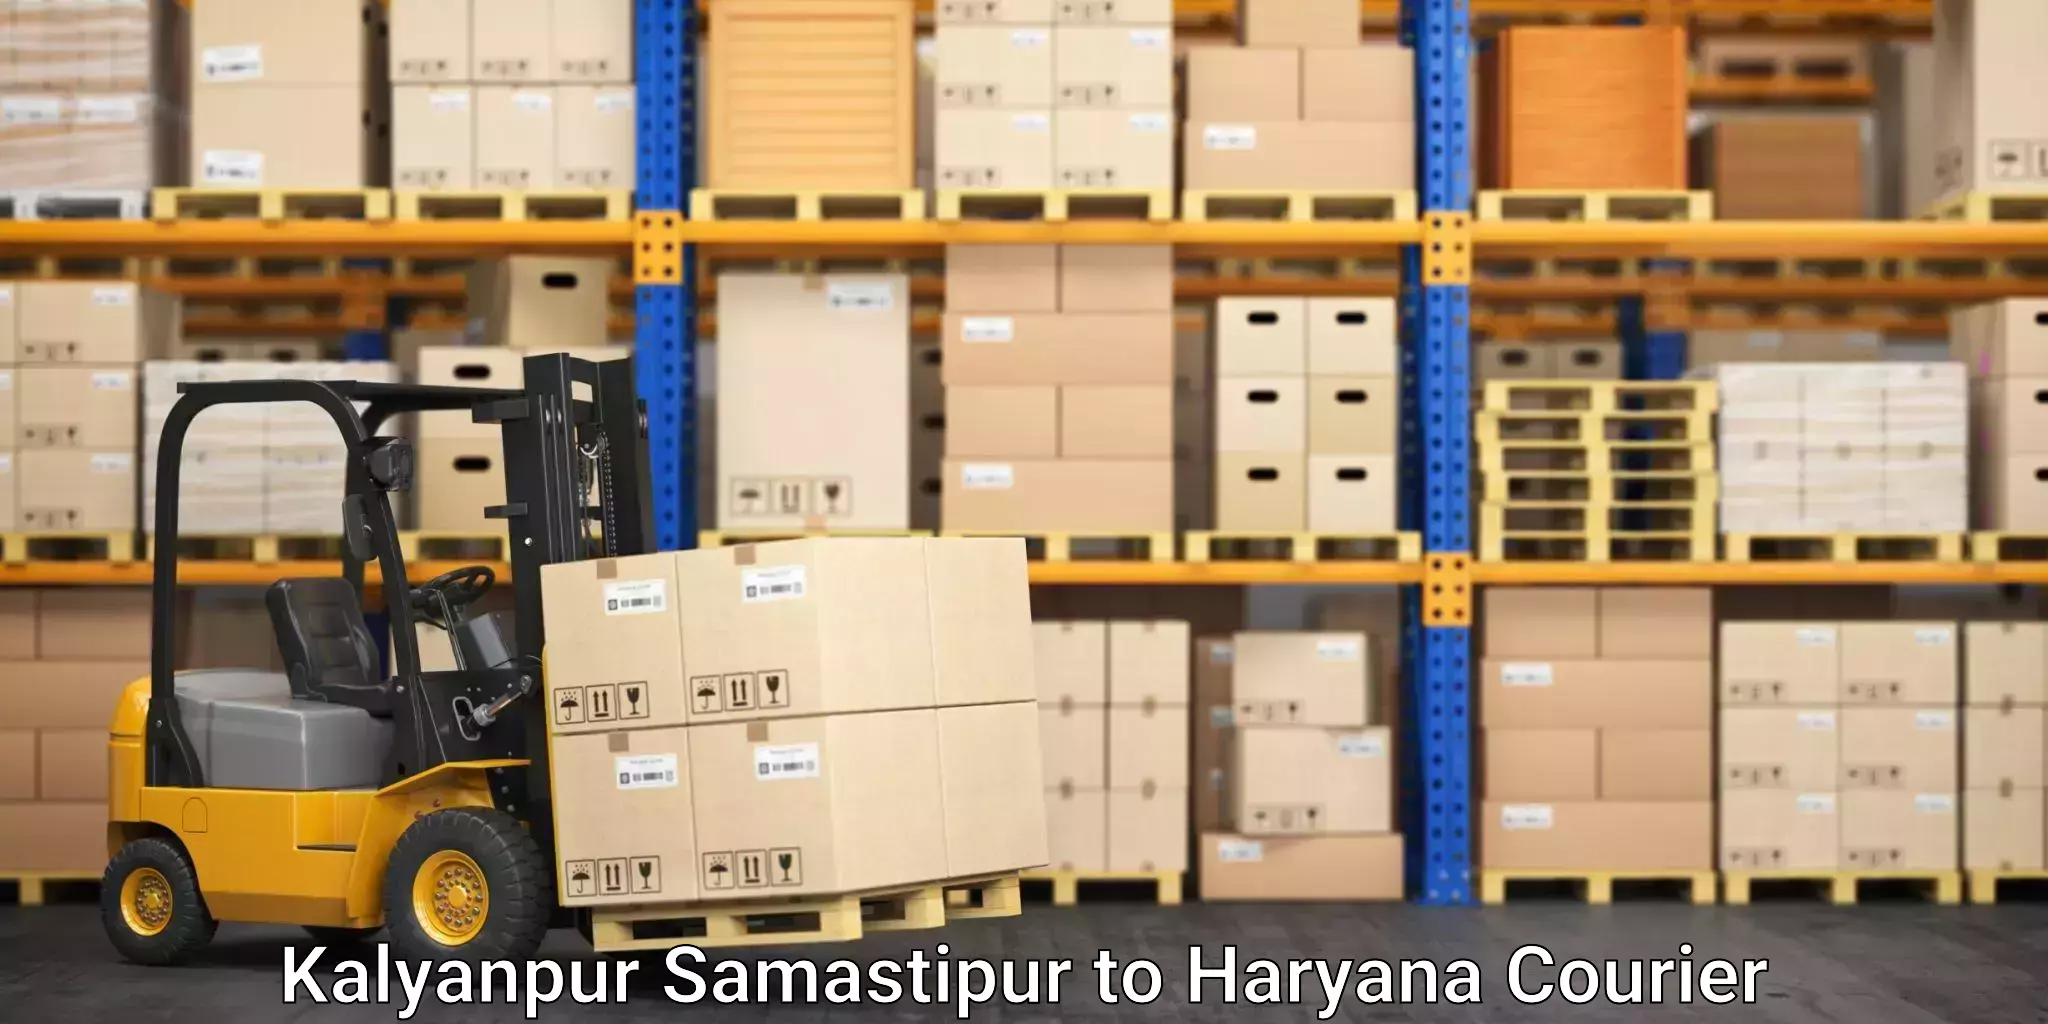 Moving and handling services Kalyanpur Samastipur to Bhiwani